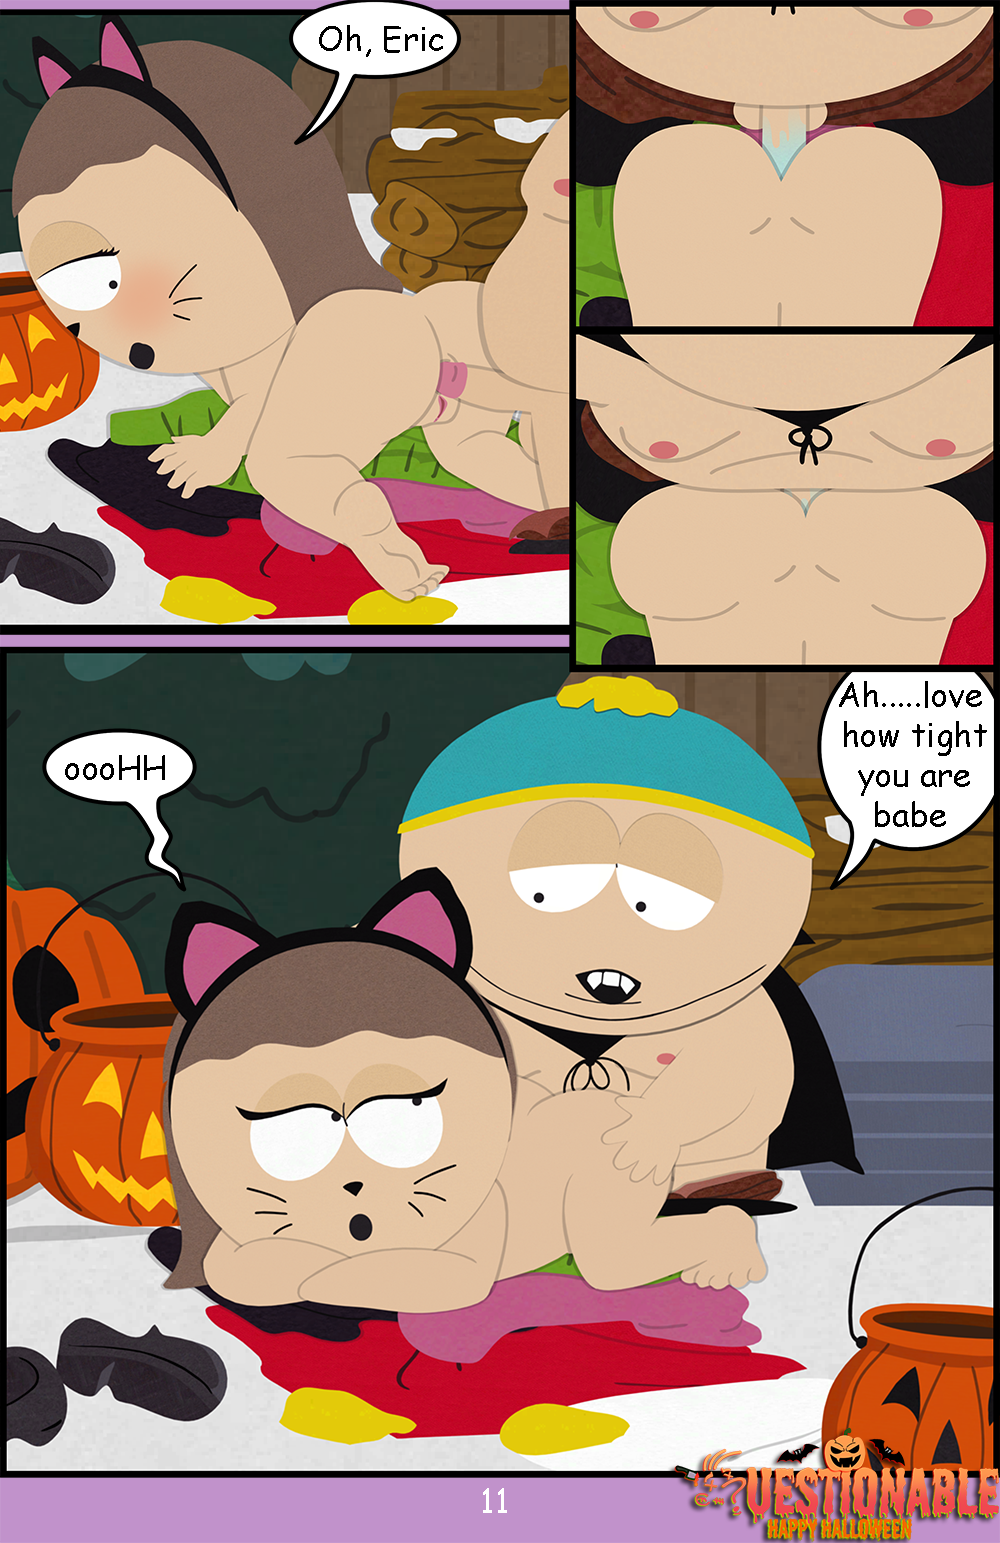 Post 4799552 Comic Eric Cartman Halloween Heidi Turner Questionable South Park